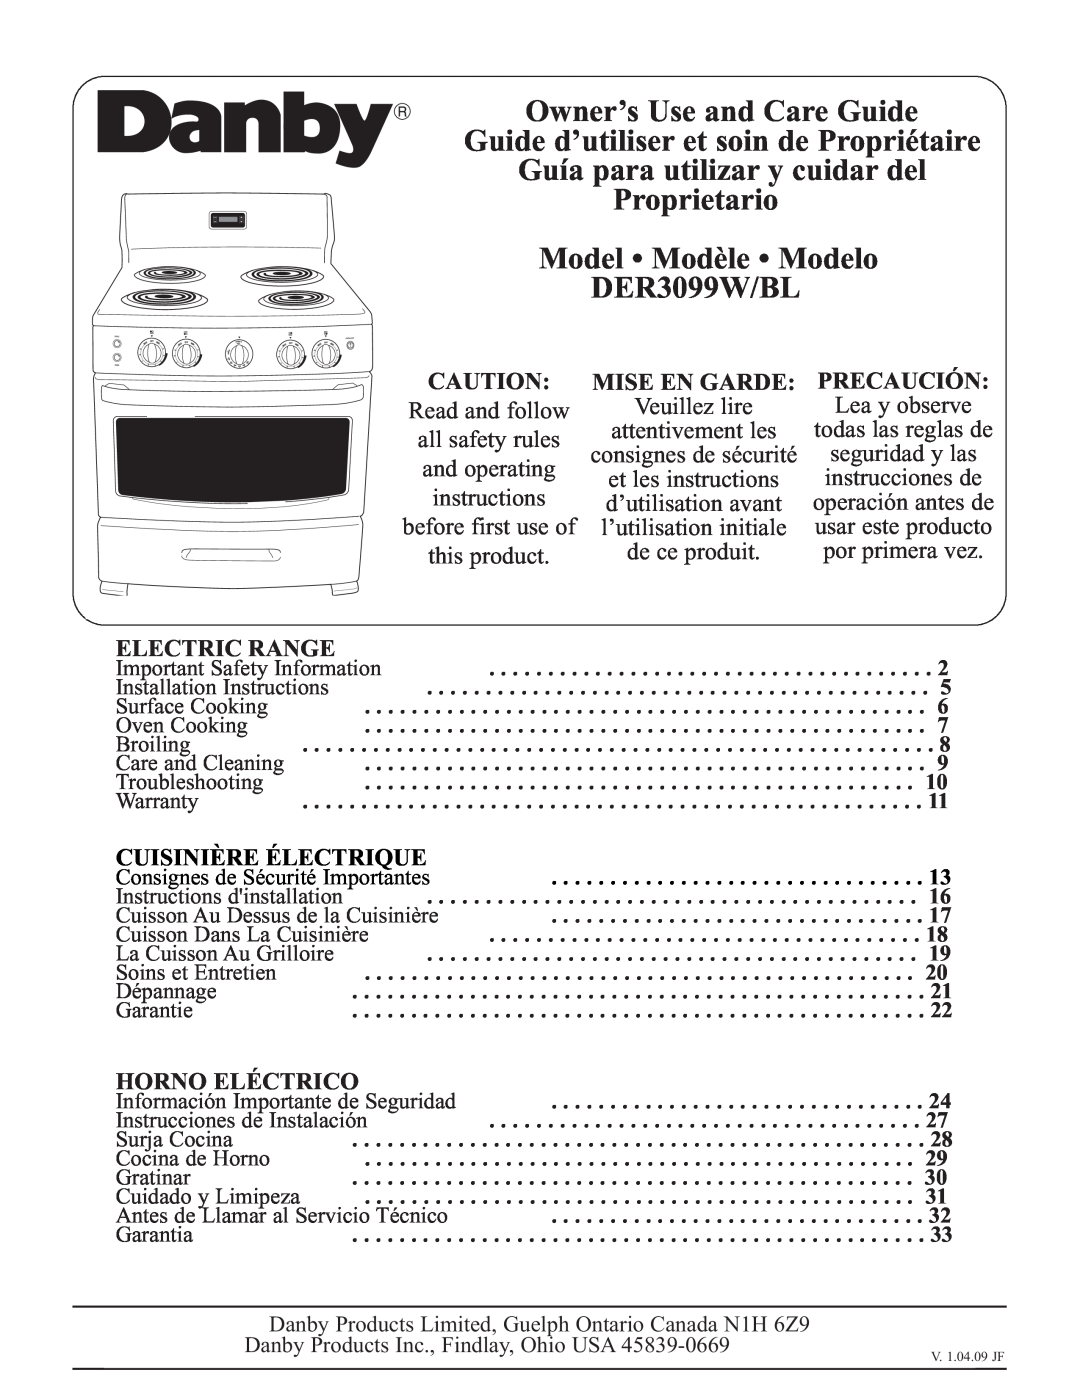 Danby installation instructions Owner’s Use and Care Guide Guide d’utiliser et soin de Propriétaire, DER3099W/BL 